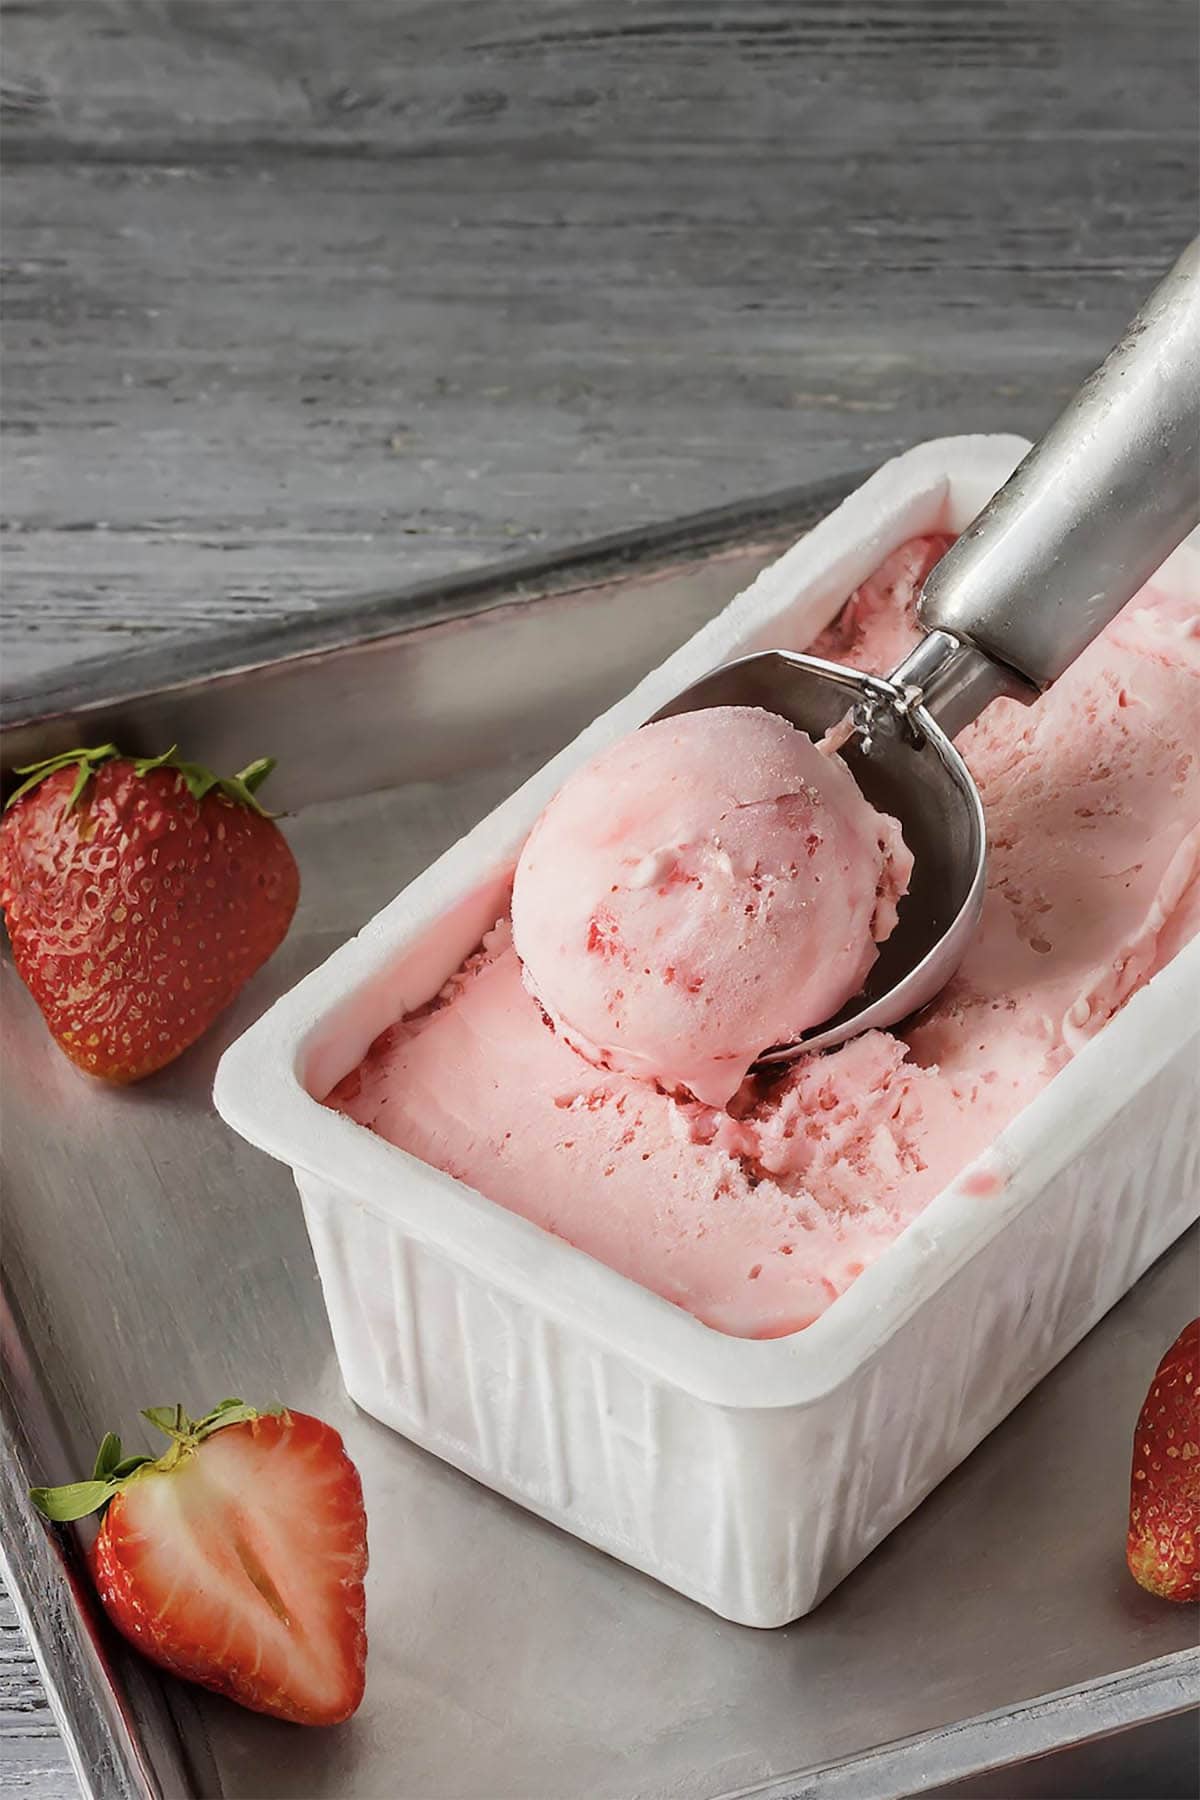 homemade strawberry ice cream.